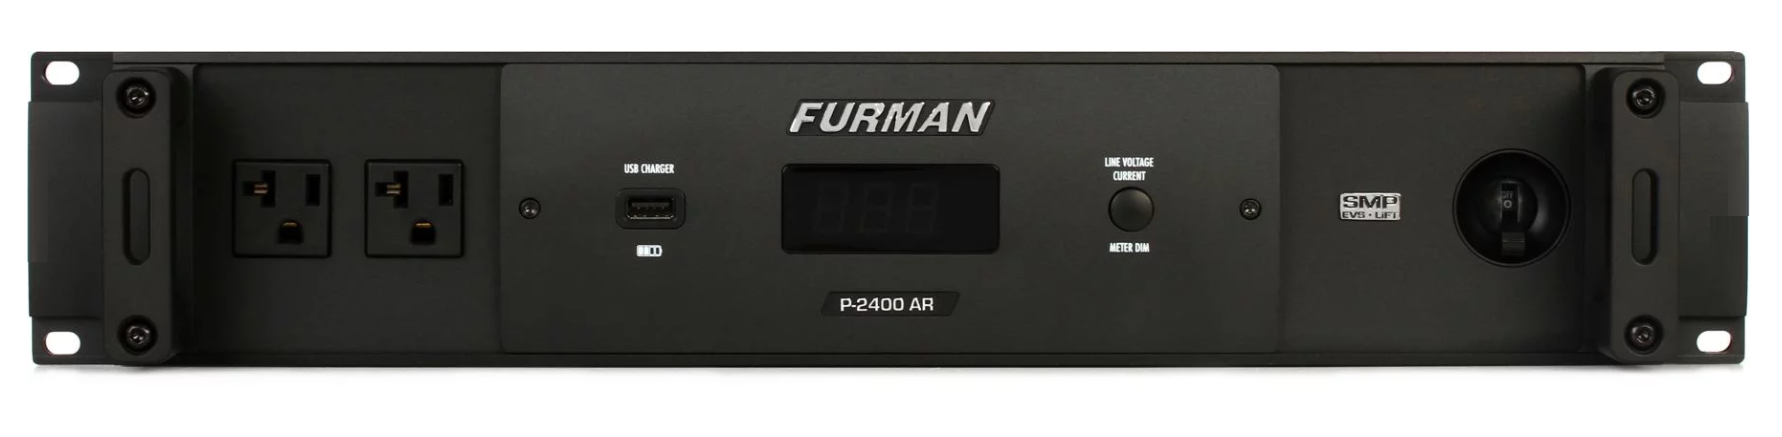 Furman P-2400 AR | Voltage Regulator & Power Conditioner